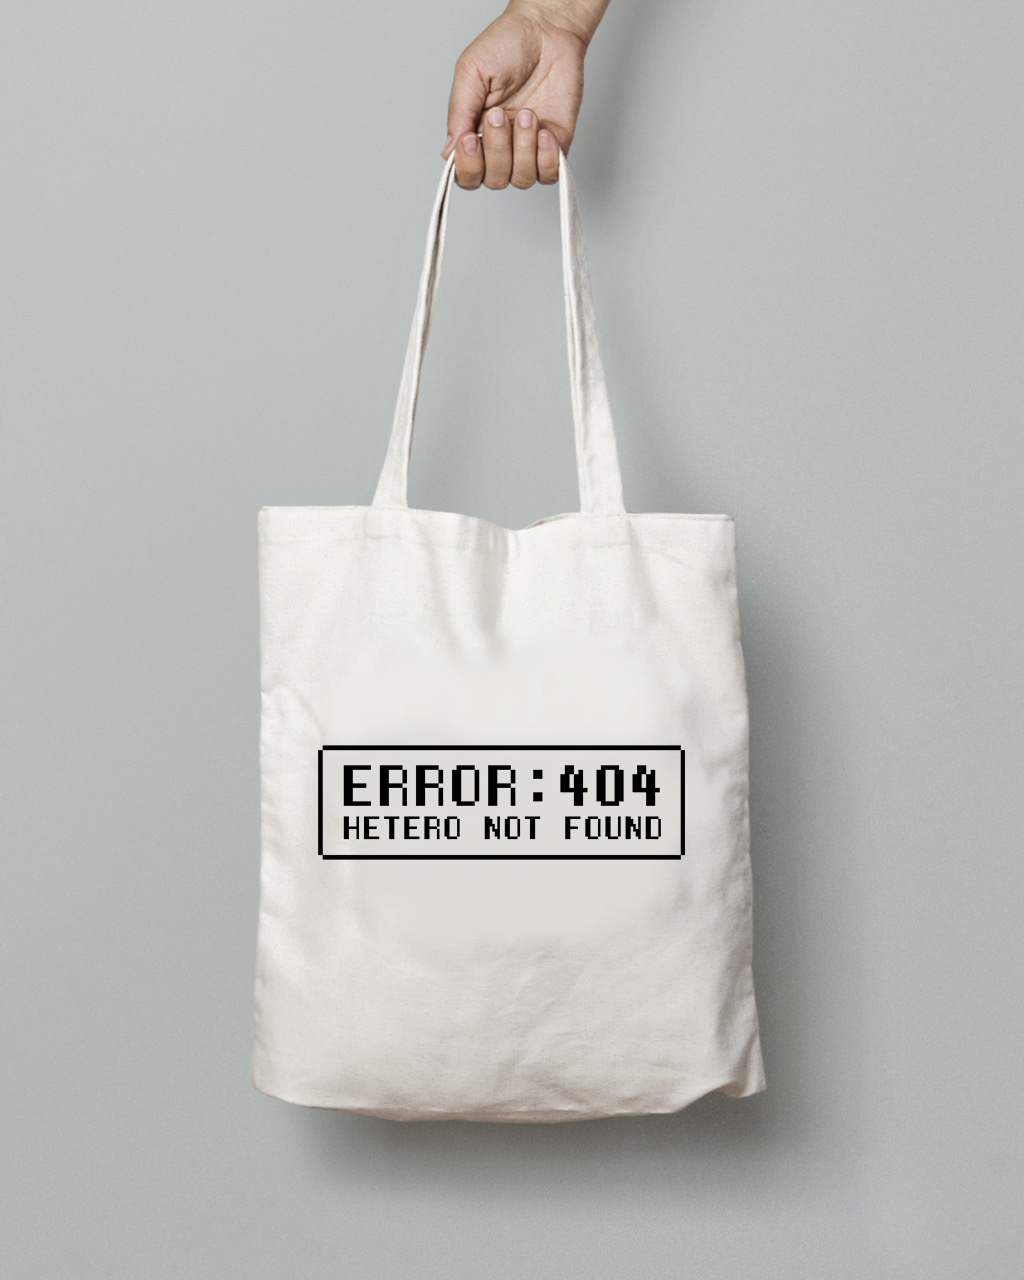 Error 404 - Hetero not found Tote bag